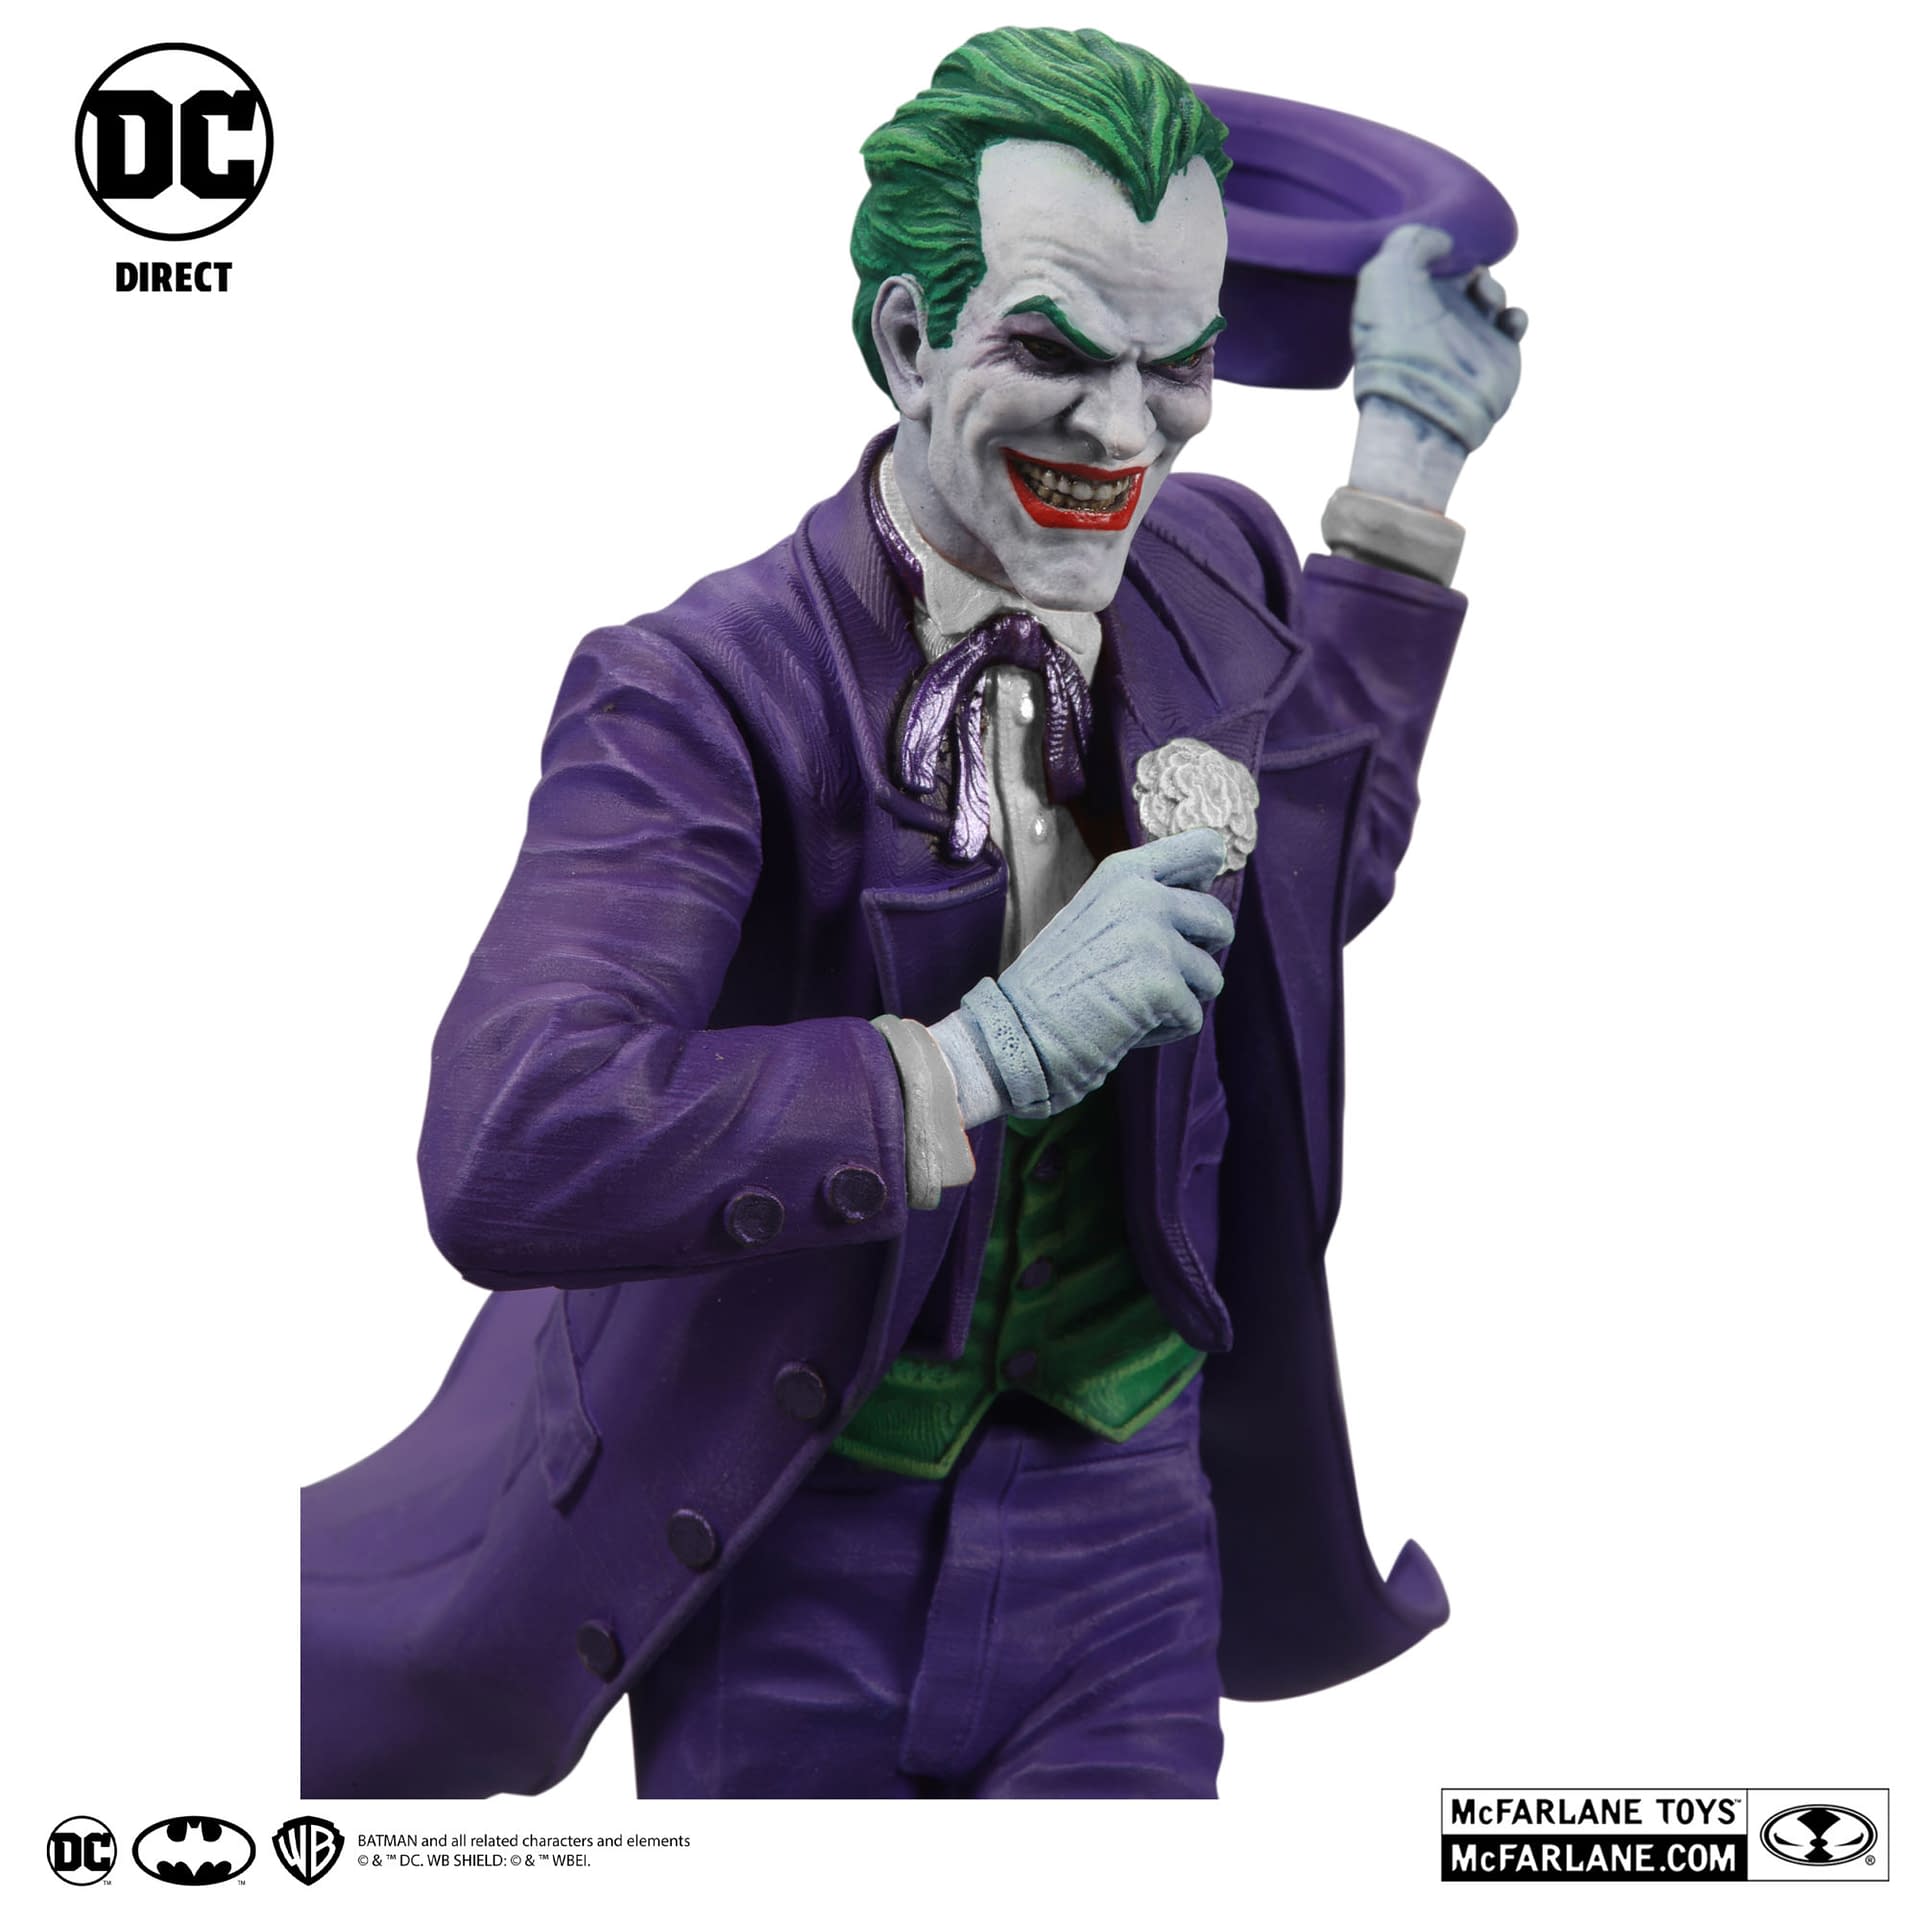 McFarlane Toys Debuts New Alex Ross The Joker Purple Craze Statue3